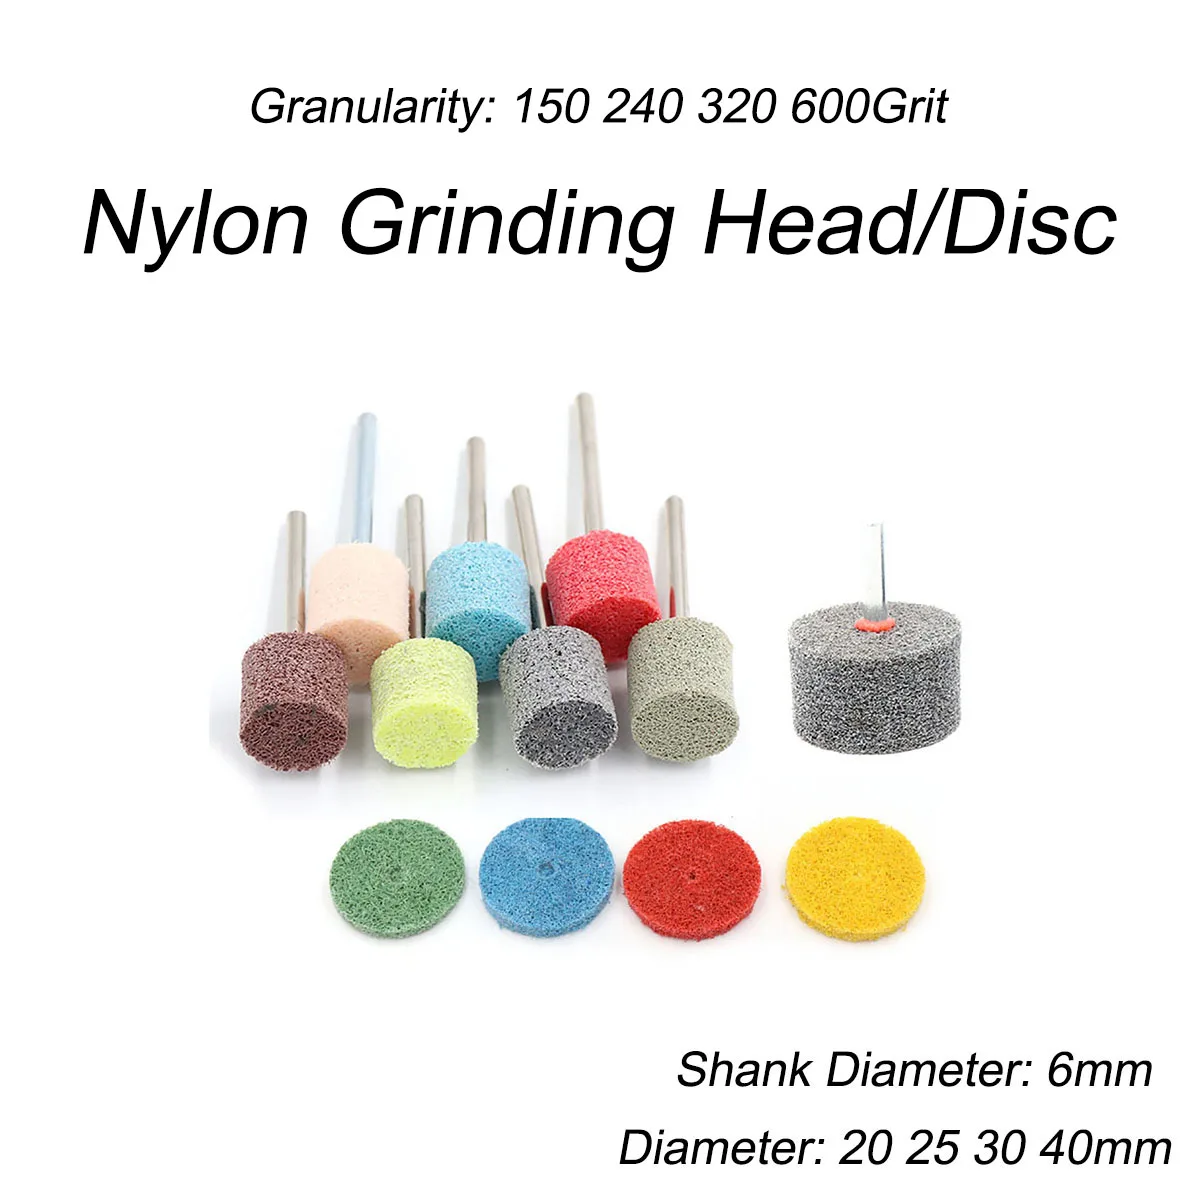 

1Pc Nylon Grinding Head Shank Diameter 6mm and Diameter 20 25 30 40mm/Nylon Grinding Disc Granularity 150 240 320 600Girt